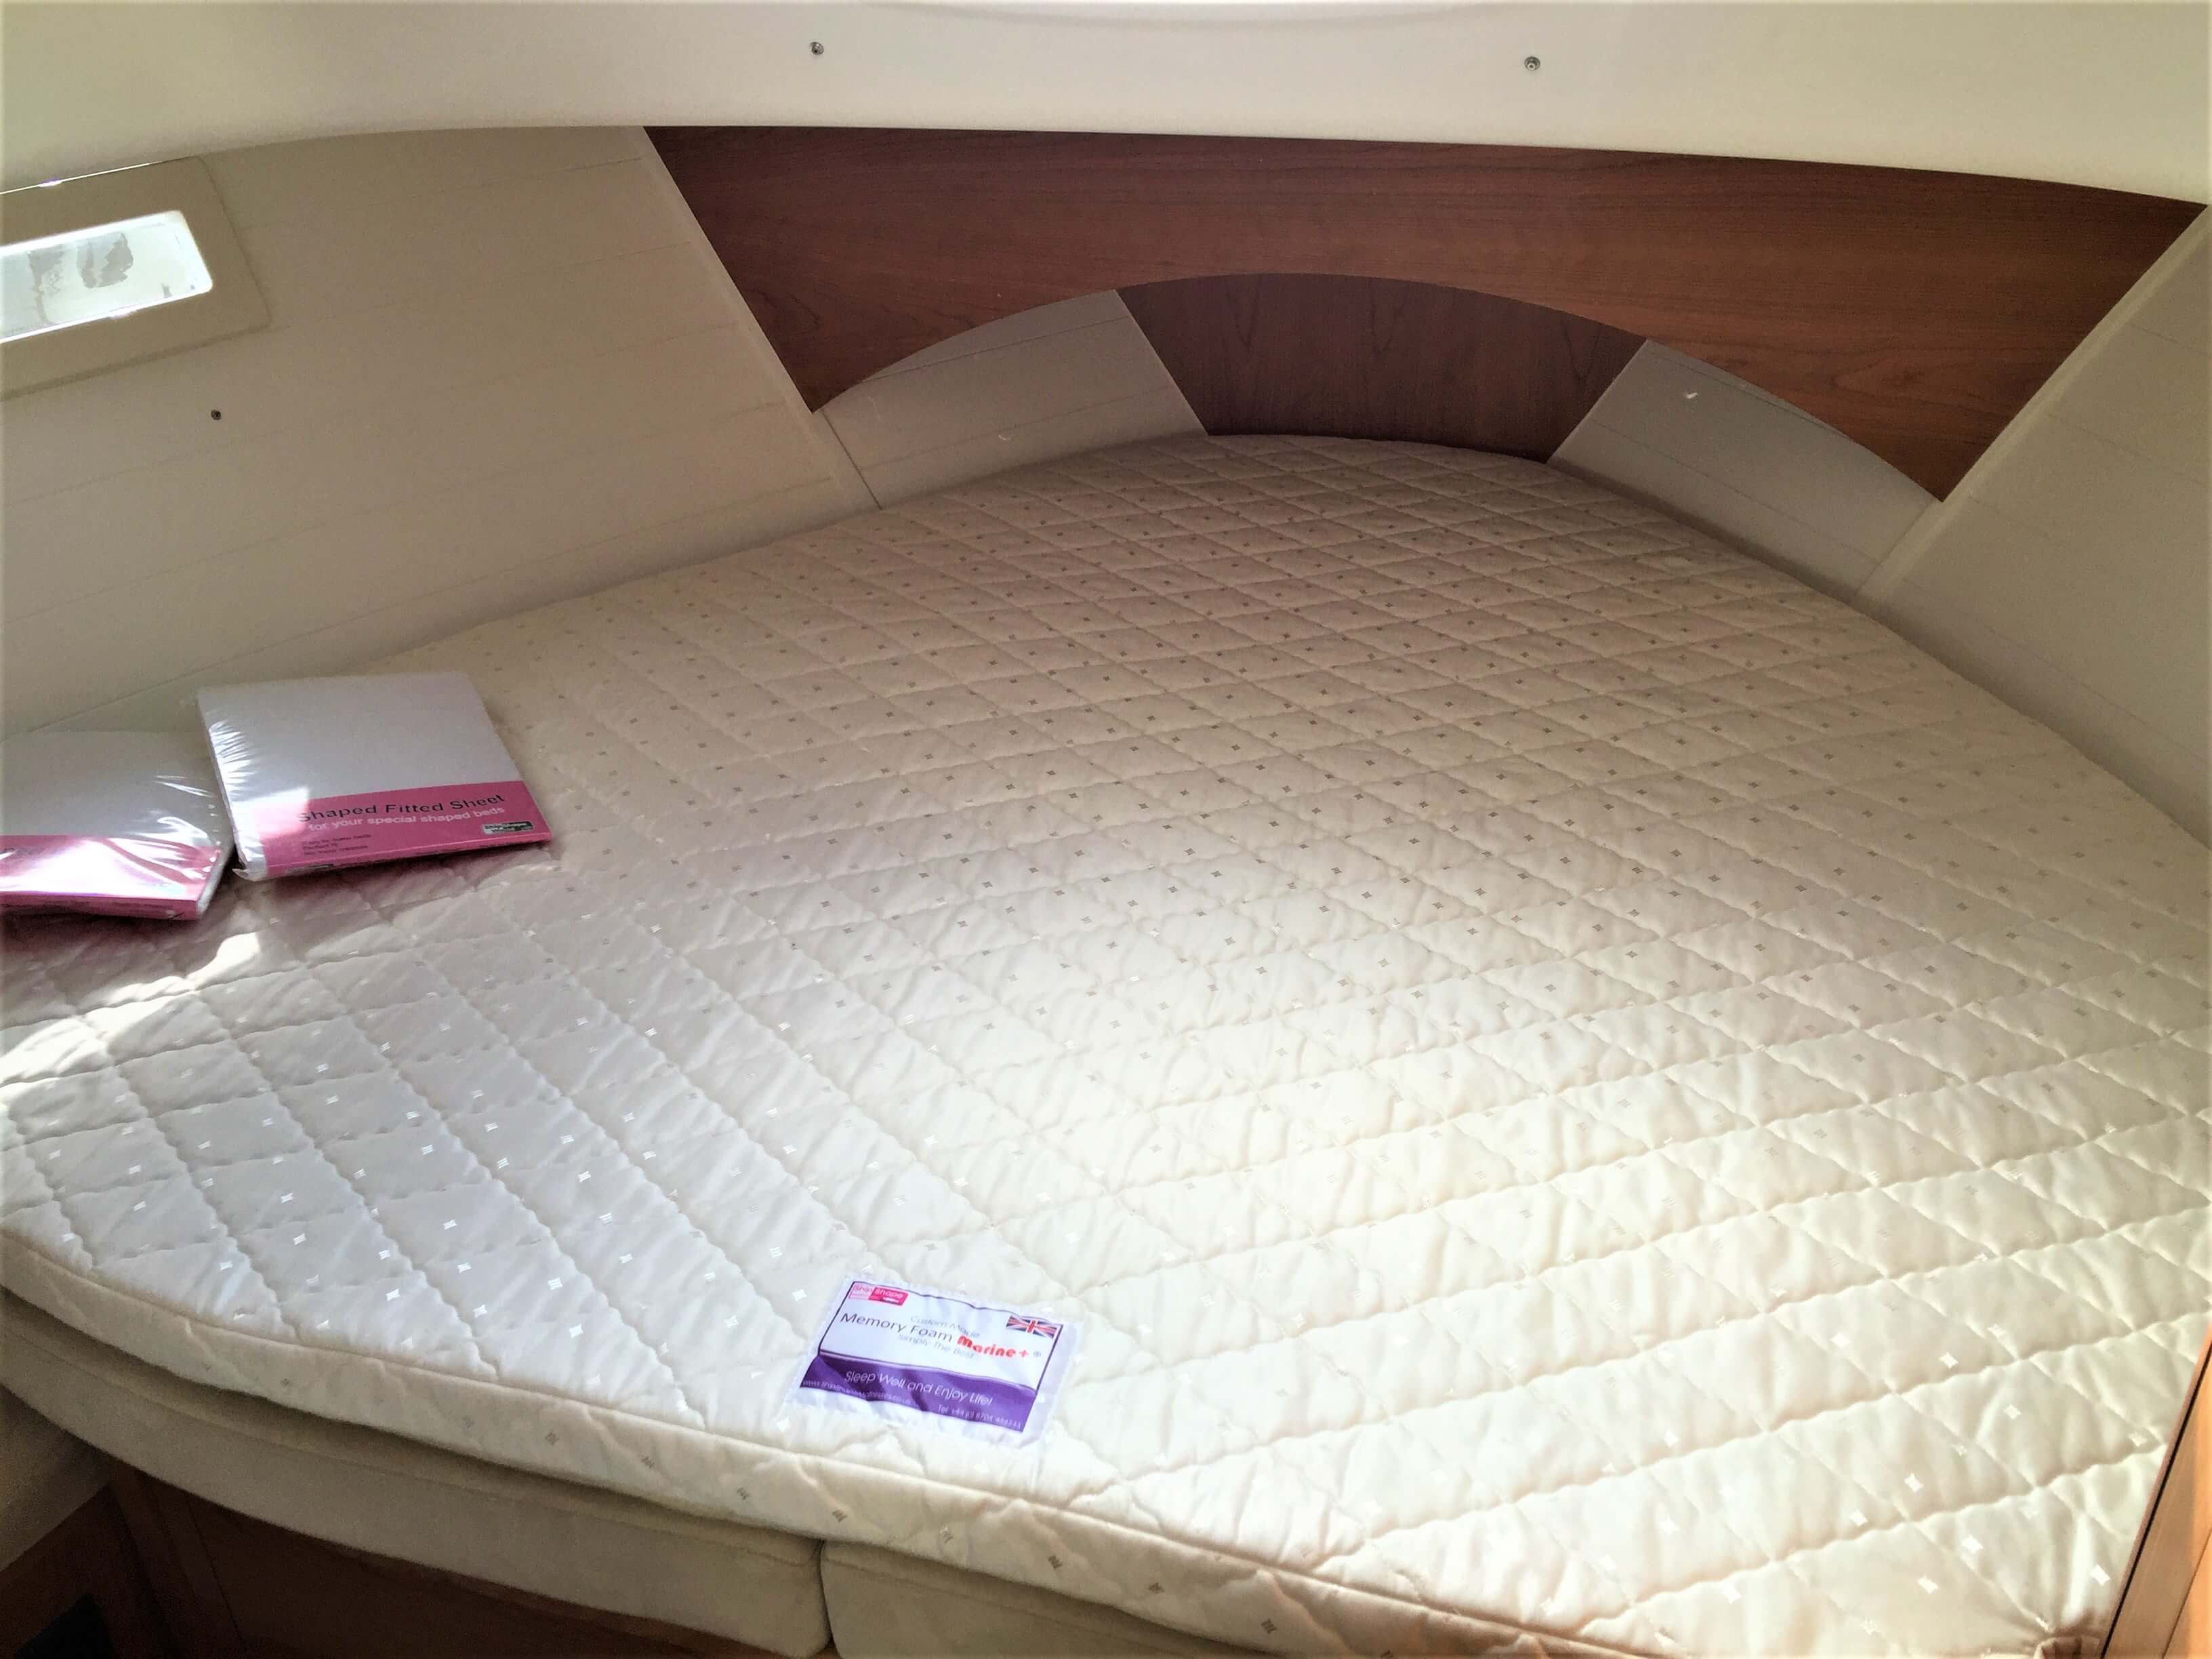 boat bed mattress topper